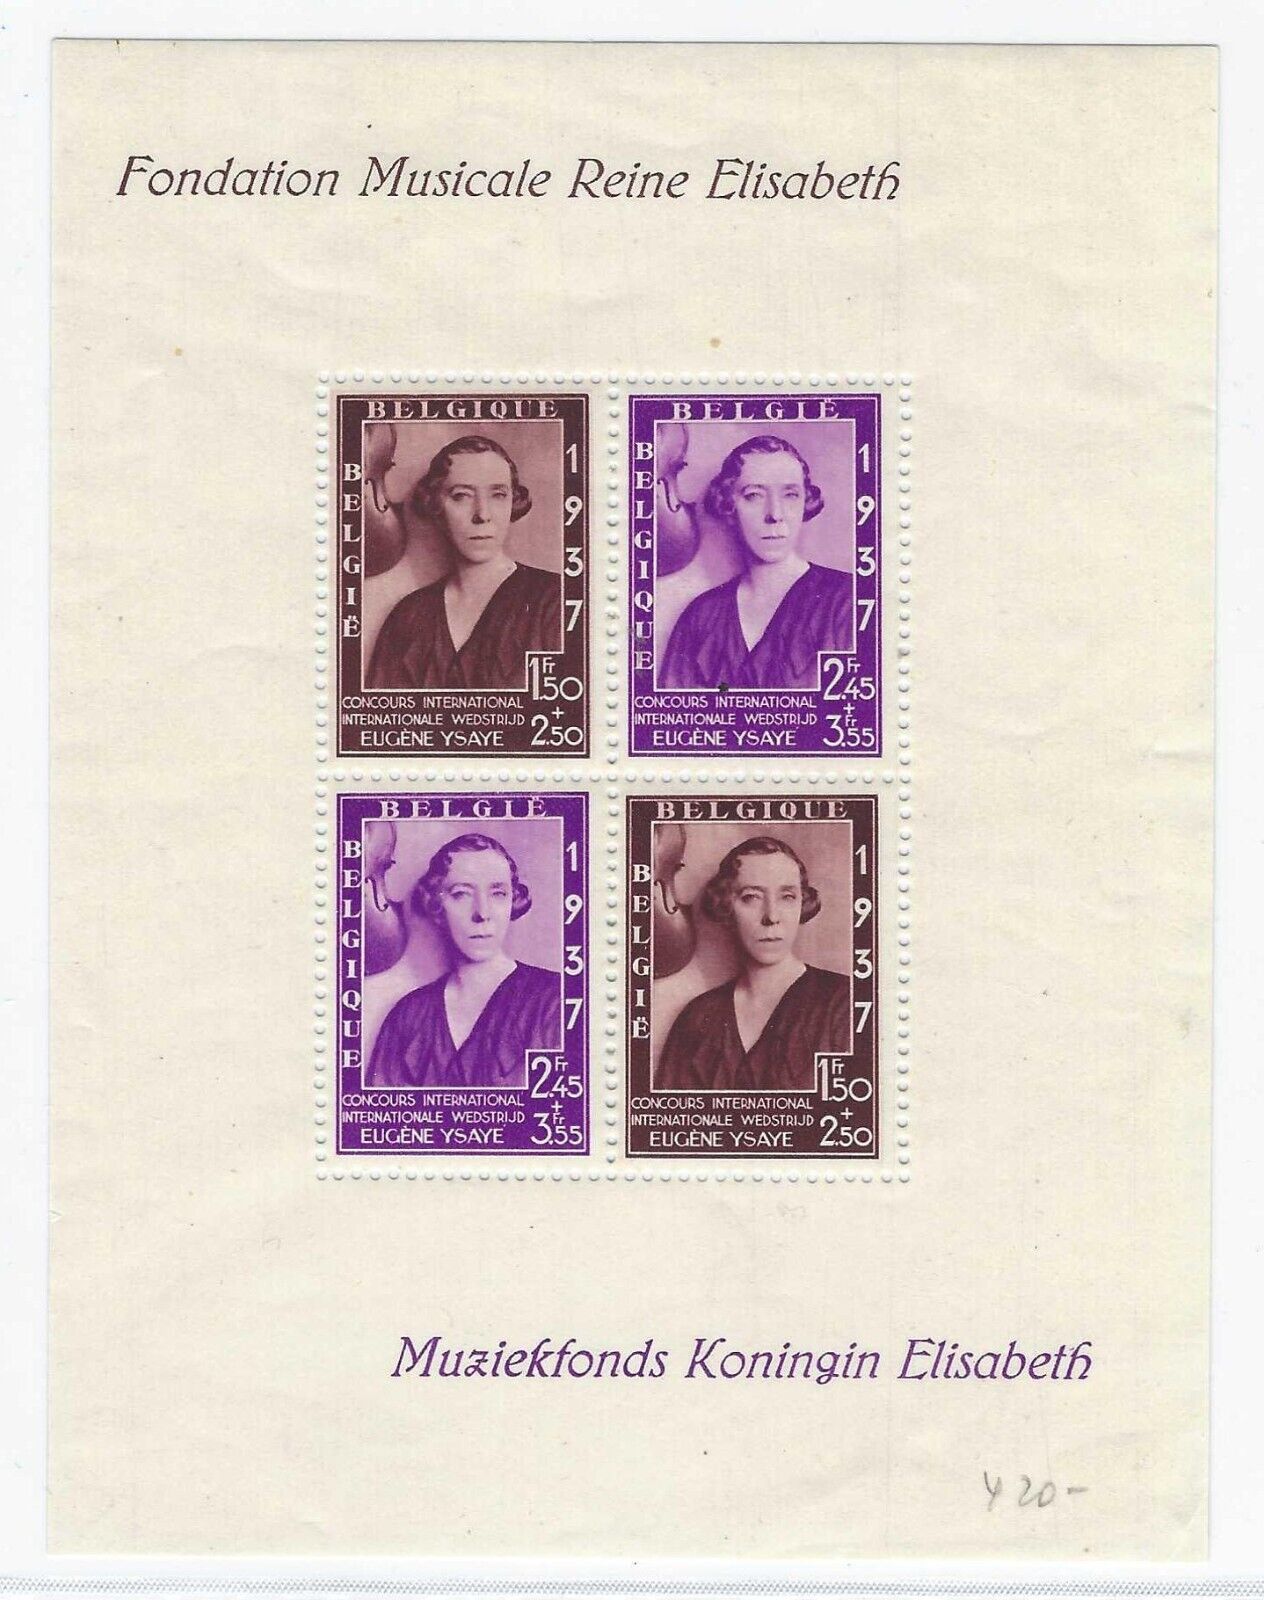 BELGIUM 1937 QUEEN ELIZABETH MUSIC FOUNDATION SOUVENIR SHEET SCOTT # B199 NH V.F